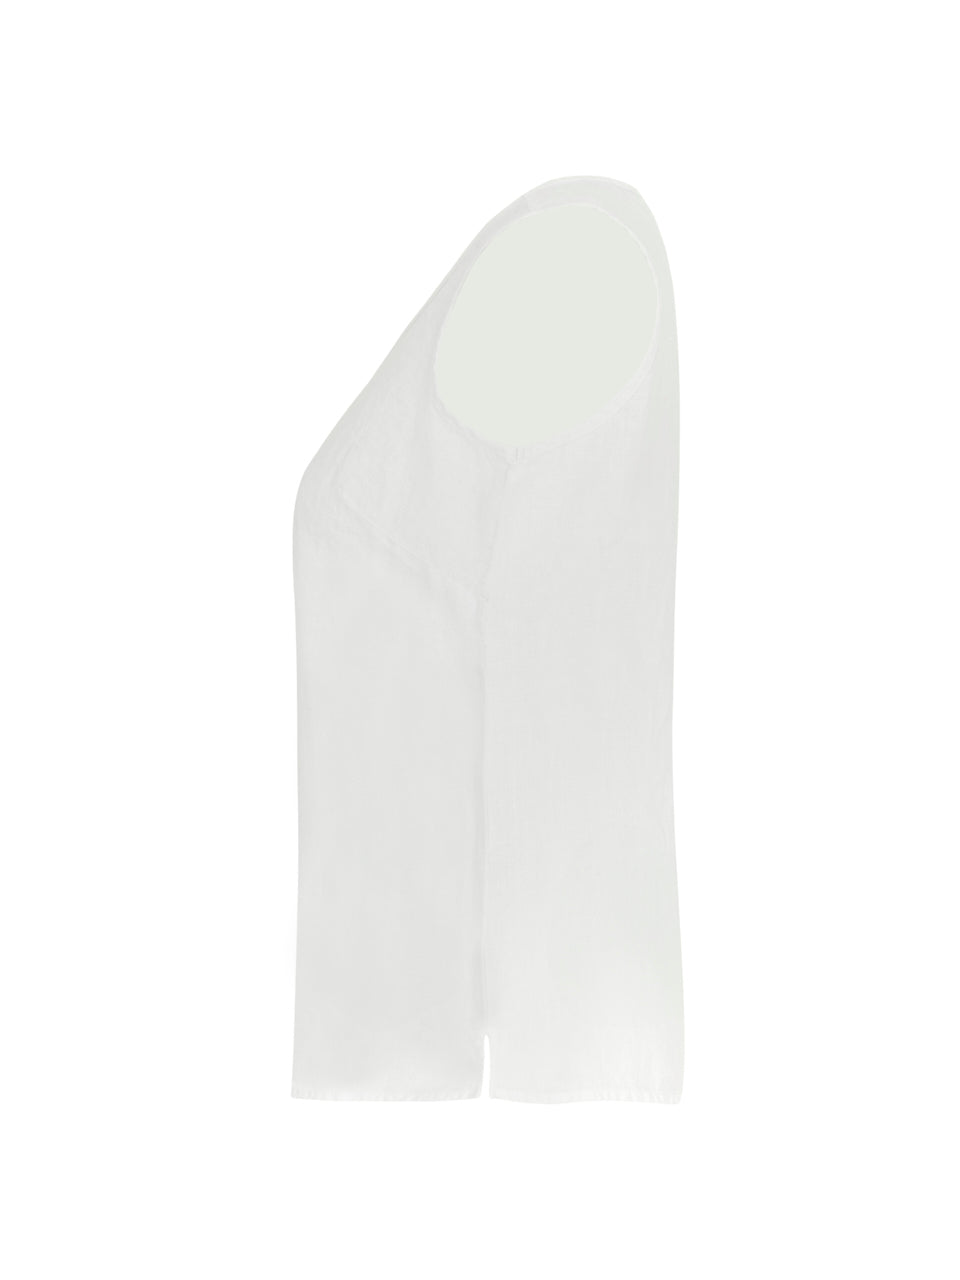 Dolcezza linen vest in white
Product code 24250